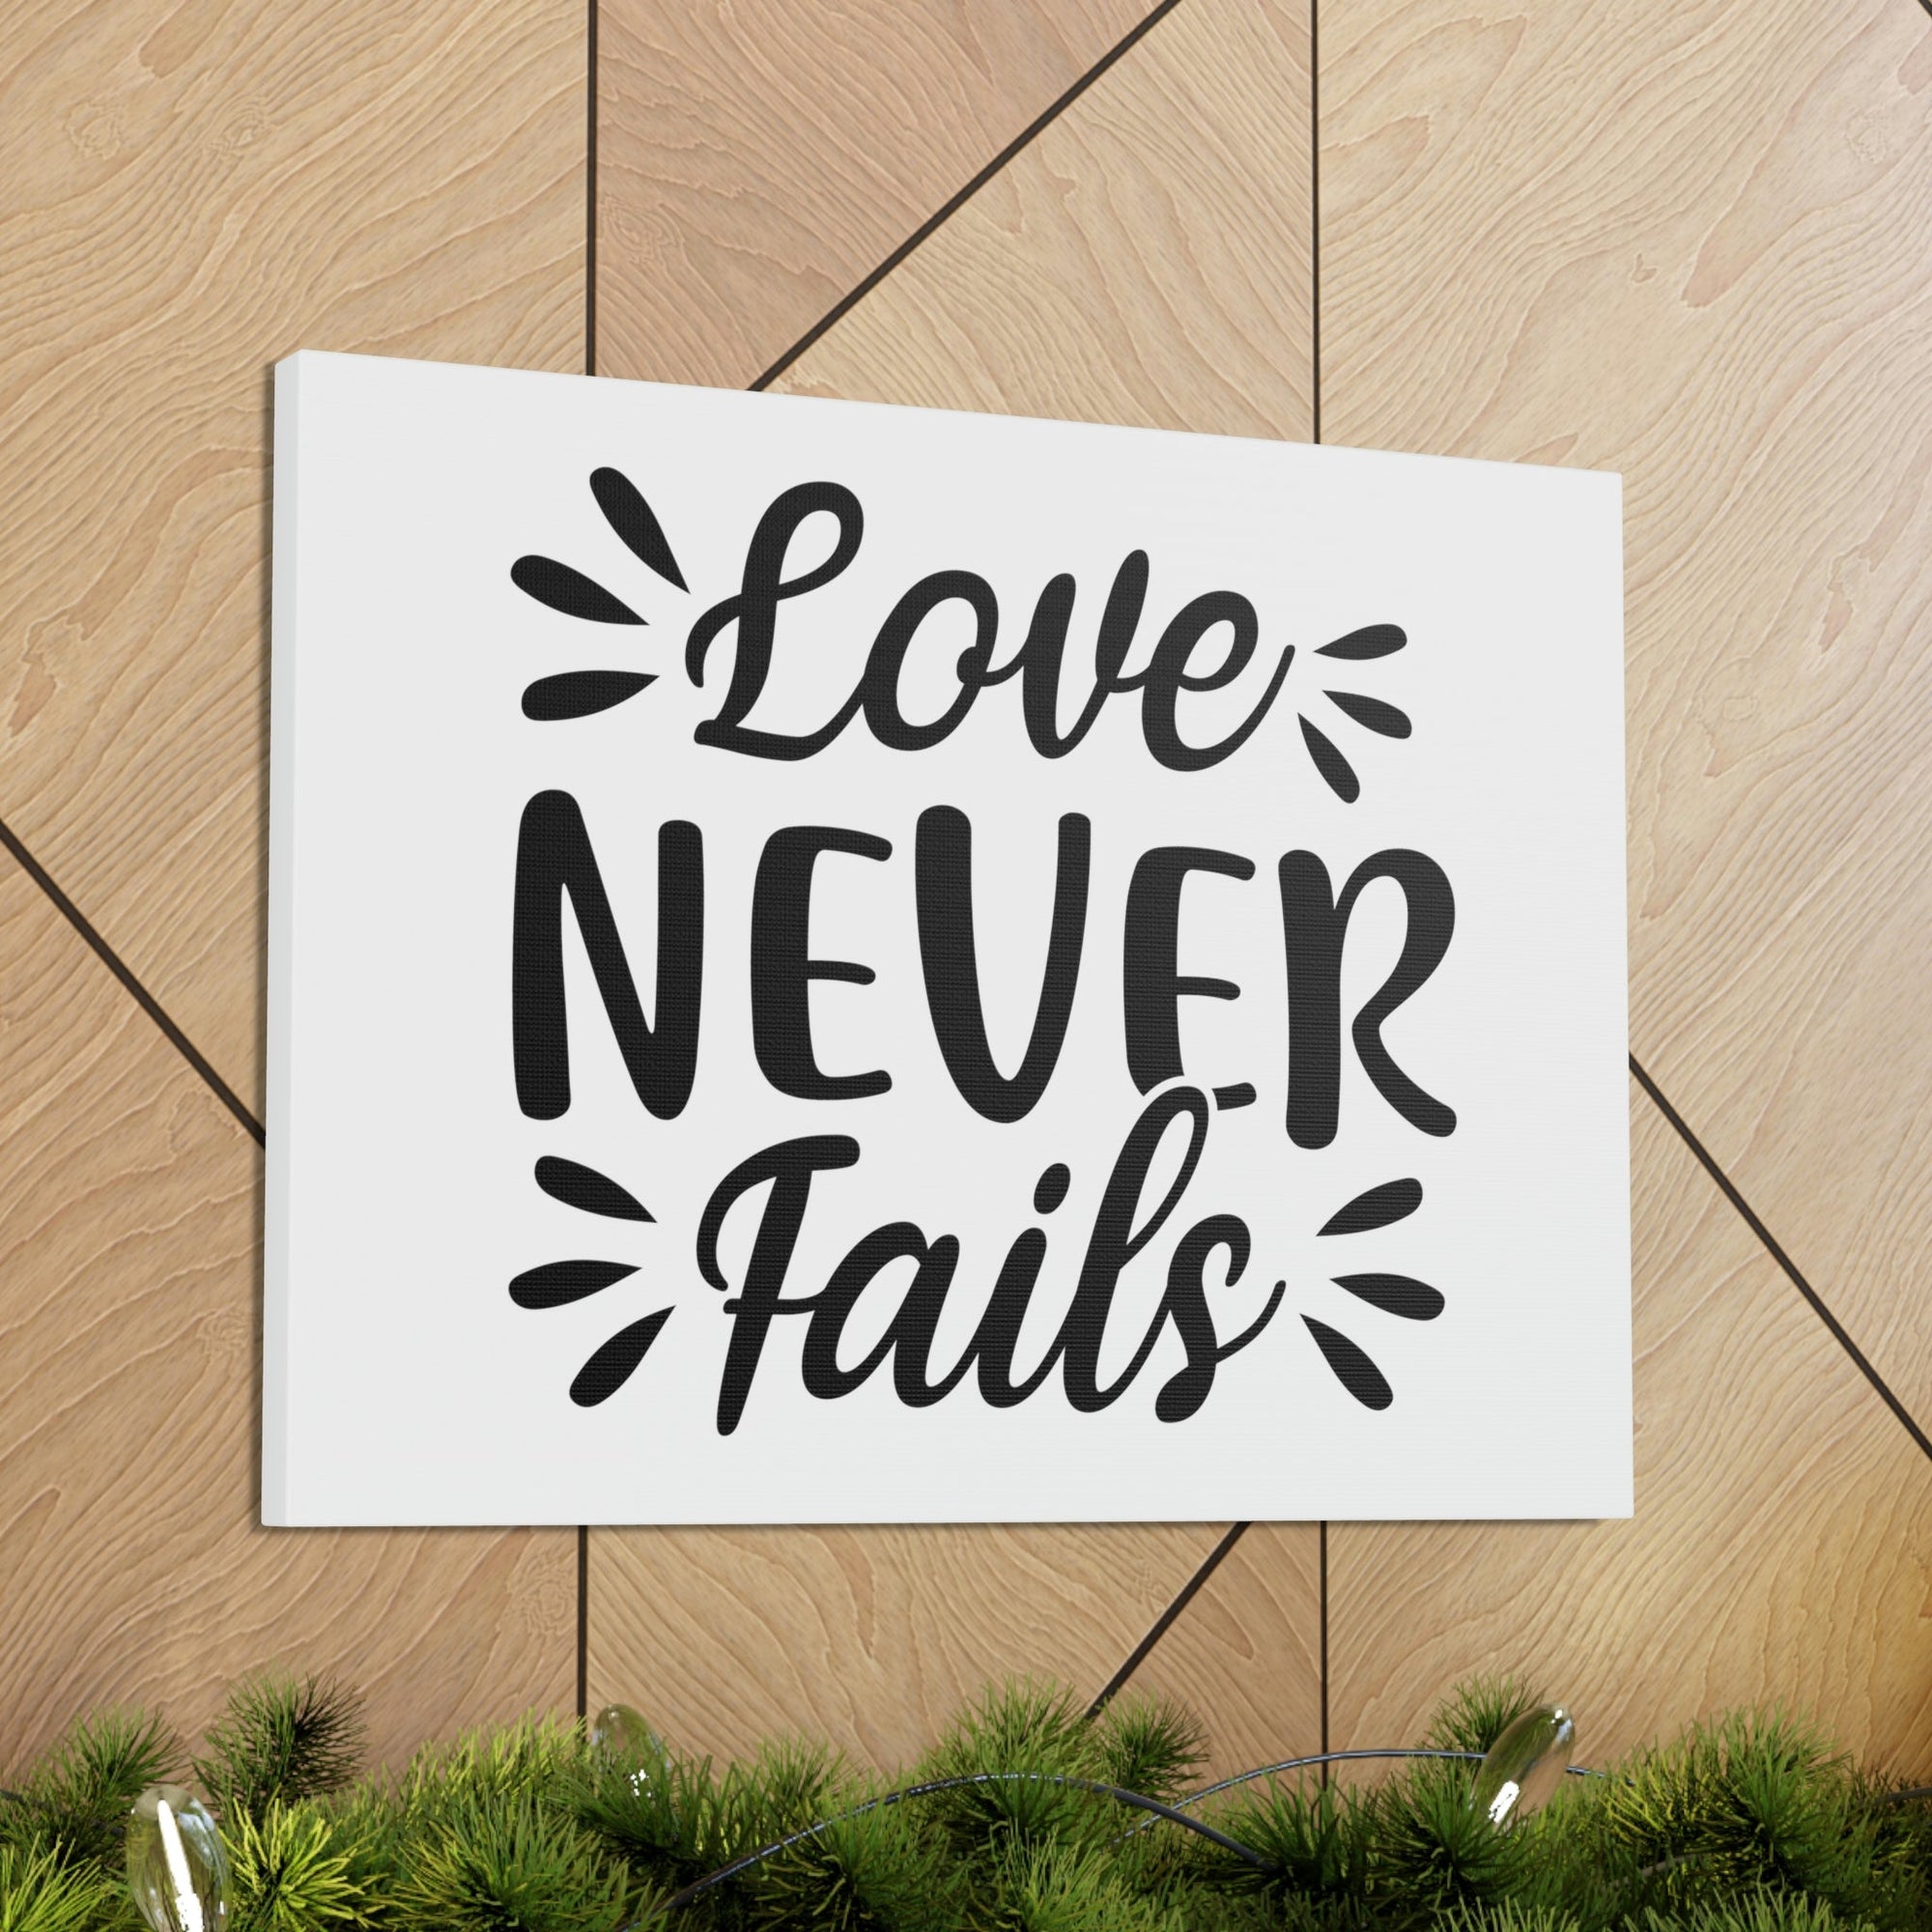 Scripture Walls Lover Never Fails 1 John 4:16 Christian Wall Art Print Ready to Hang Unframed-Express Your Love Gifts